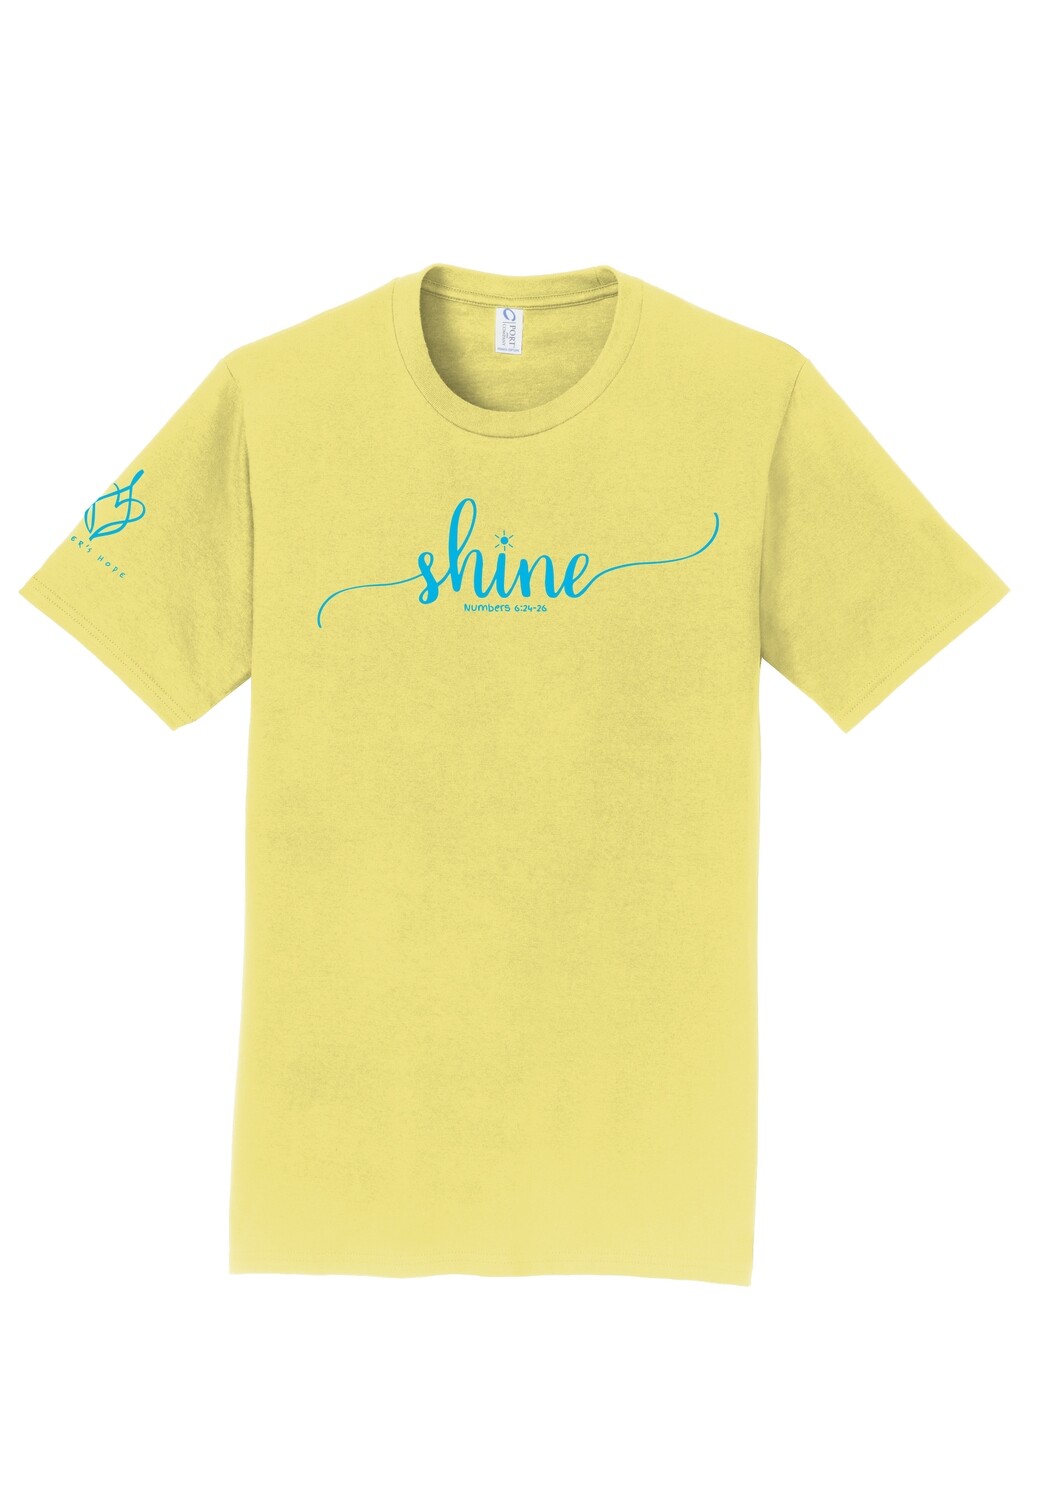 Shine T-Shirt - Yellow